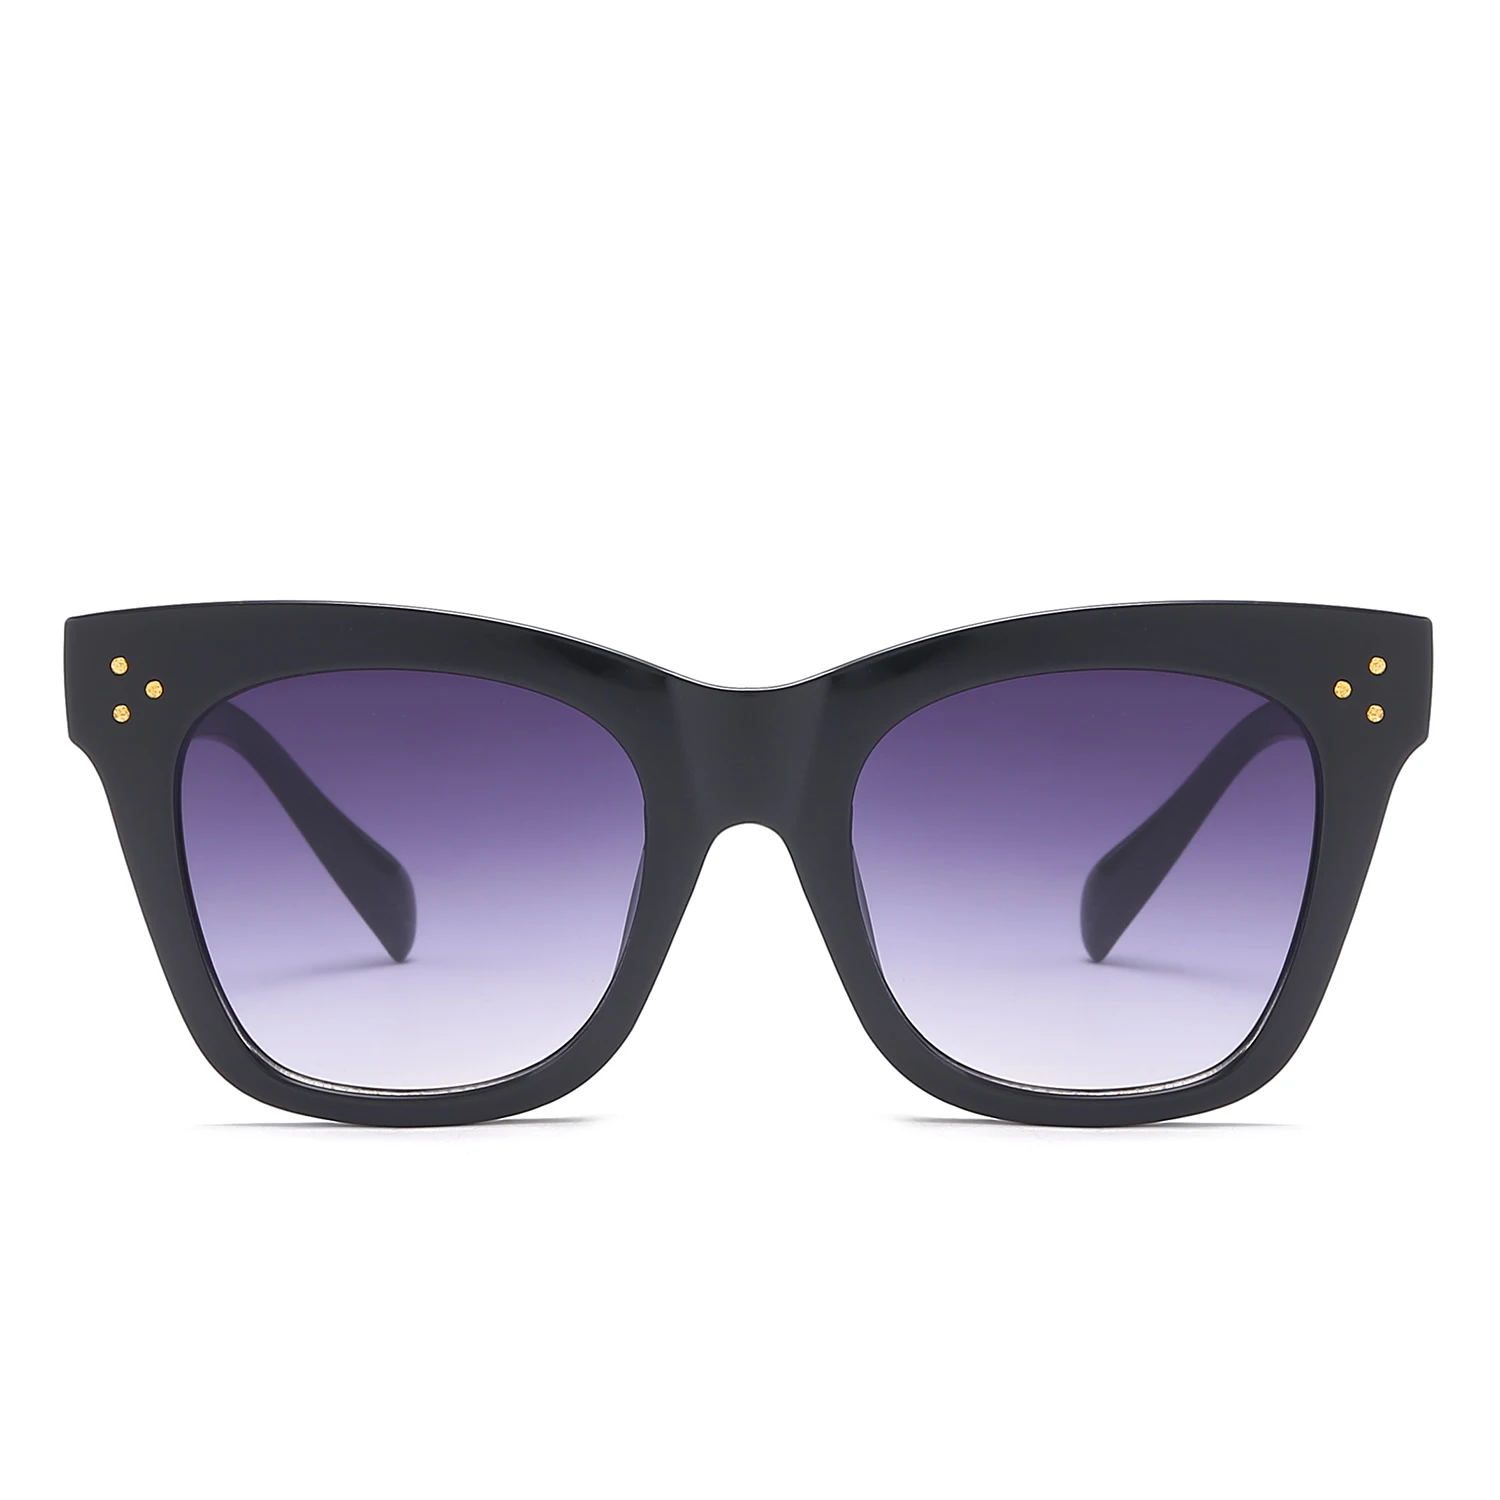 

RENNES [RTS] New arrival big frame custom logo men and women sun glasses wholesale trend uv400 fashion cheap sunglasses, Colorful